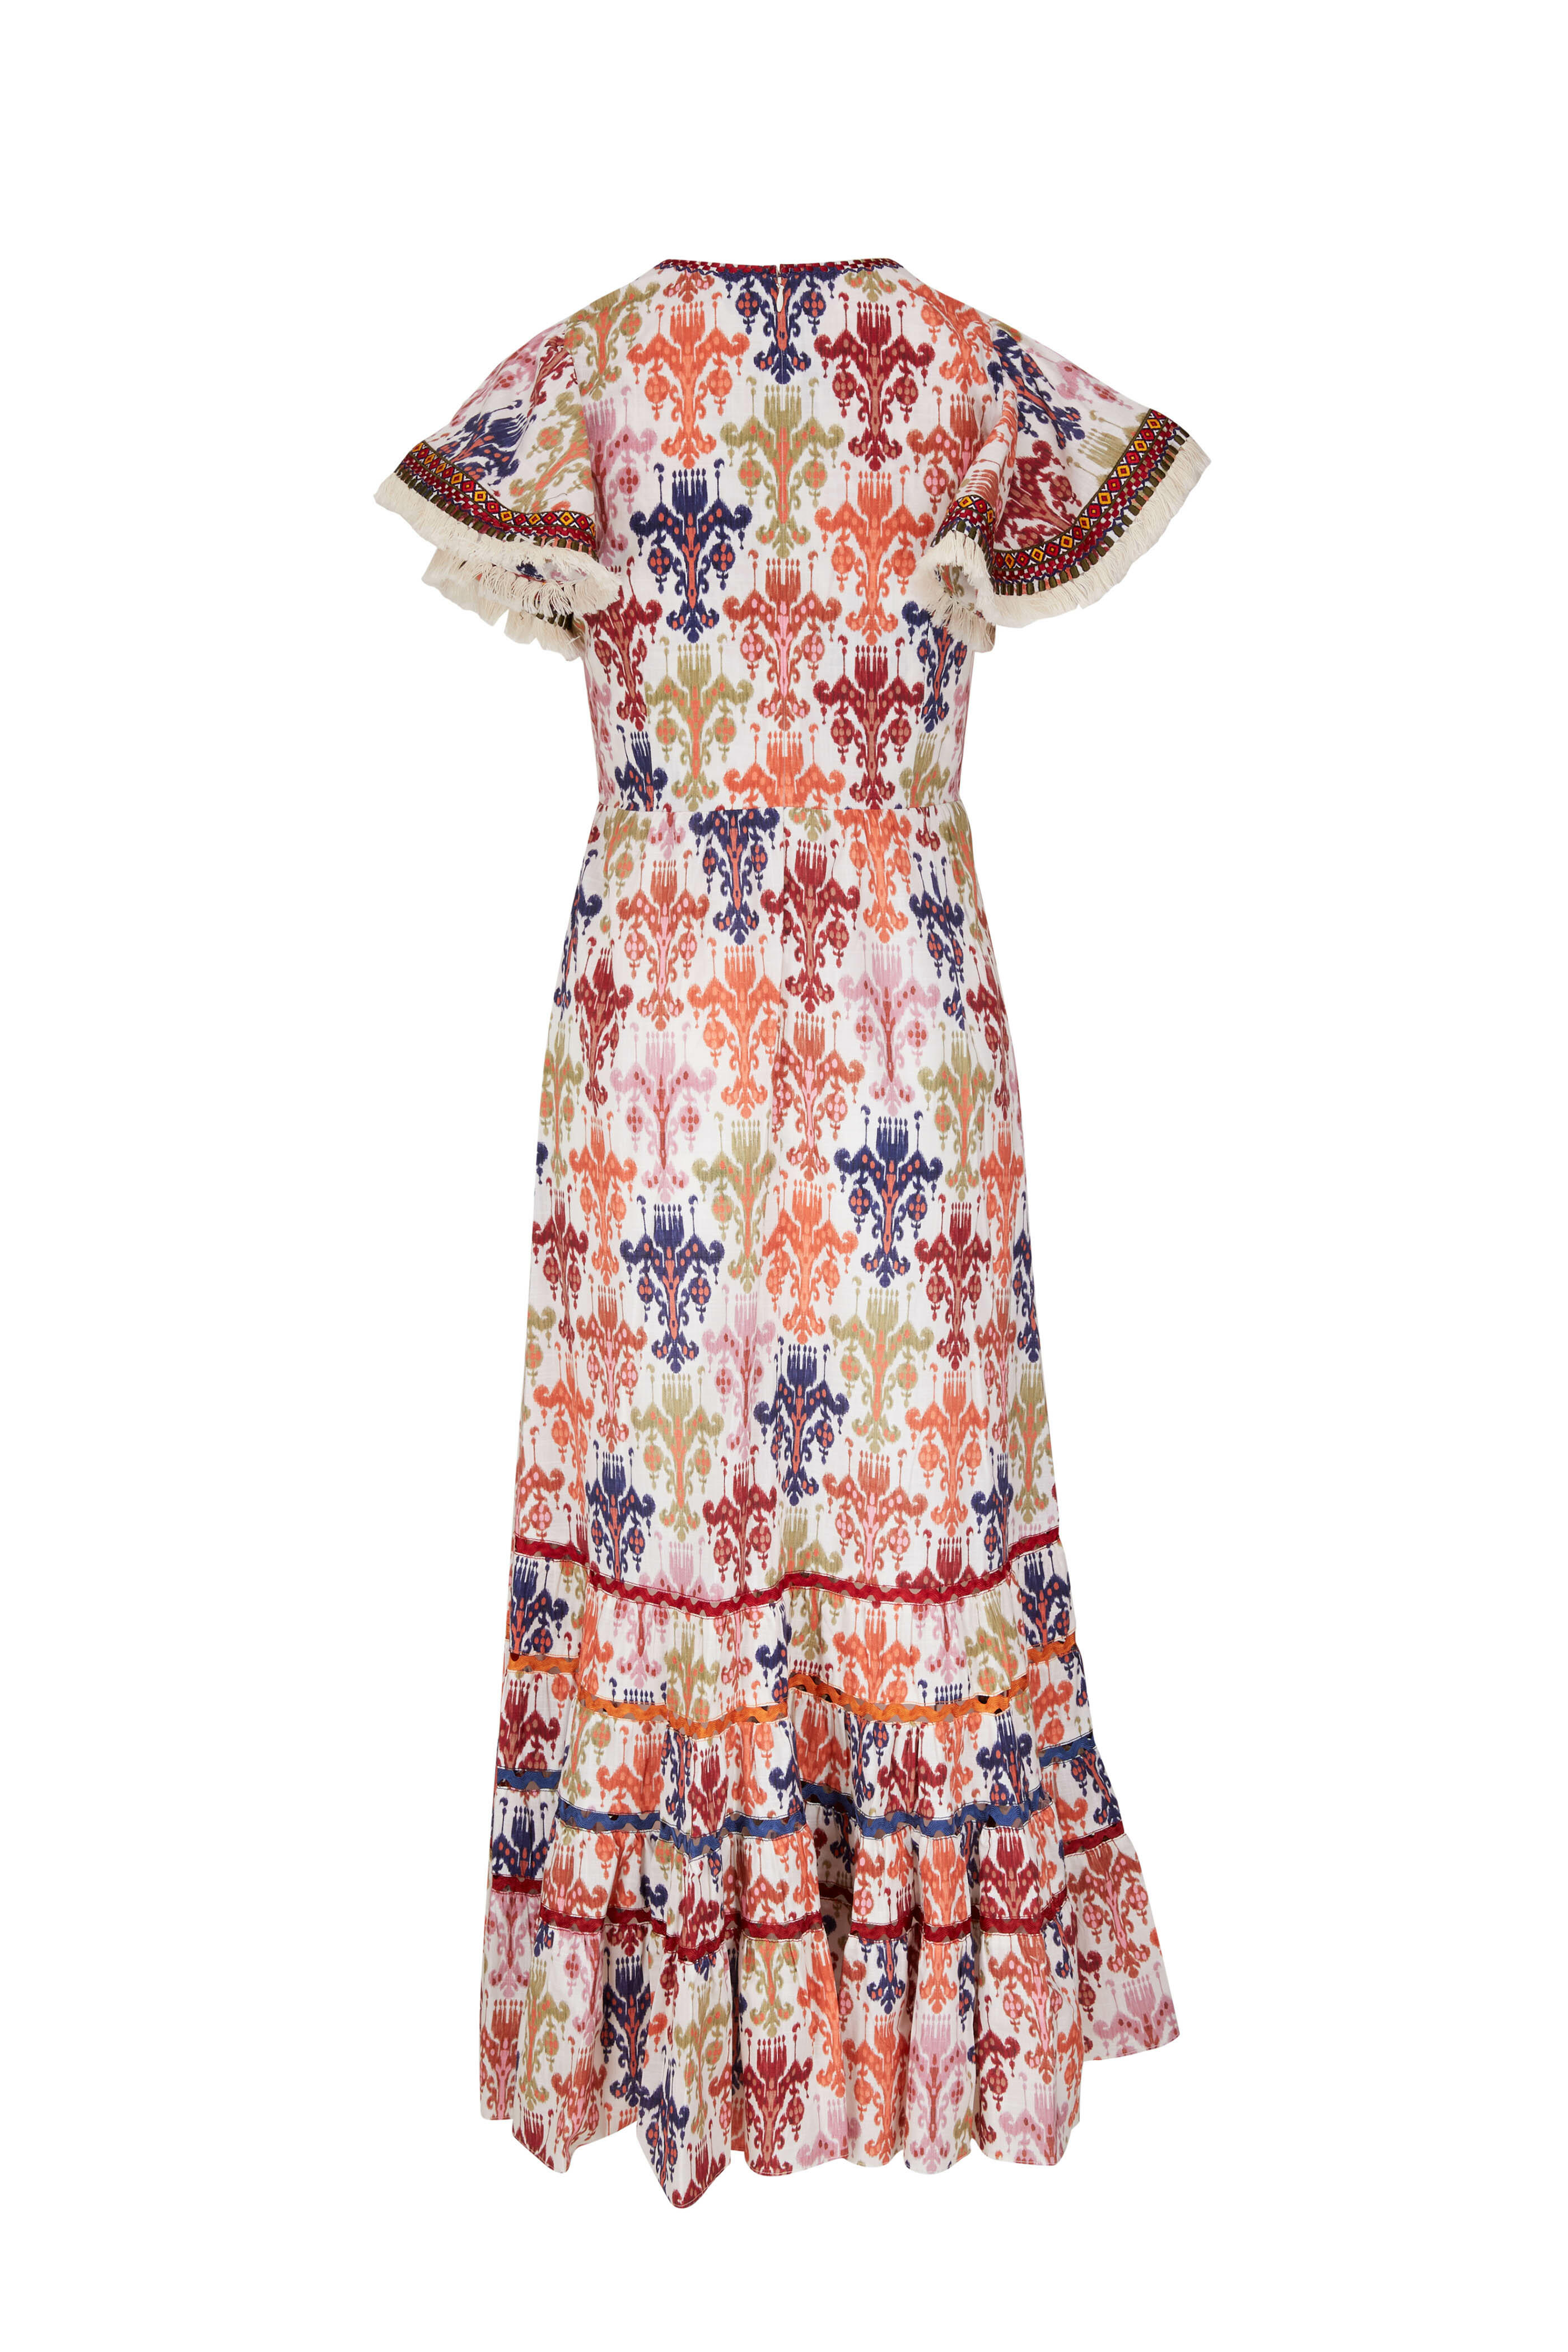 Sachin + Babi - Paloma Multicolor Ikat Tapestry Print Maxi Dress